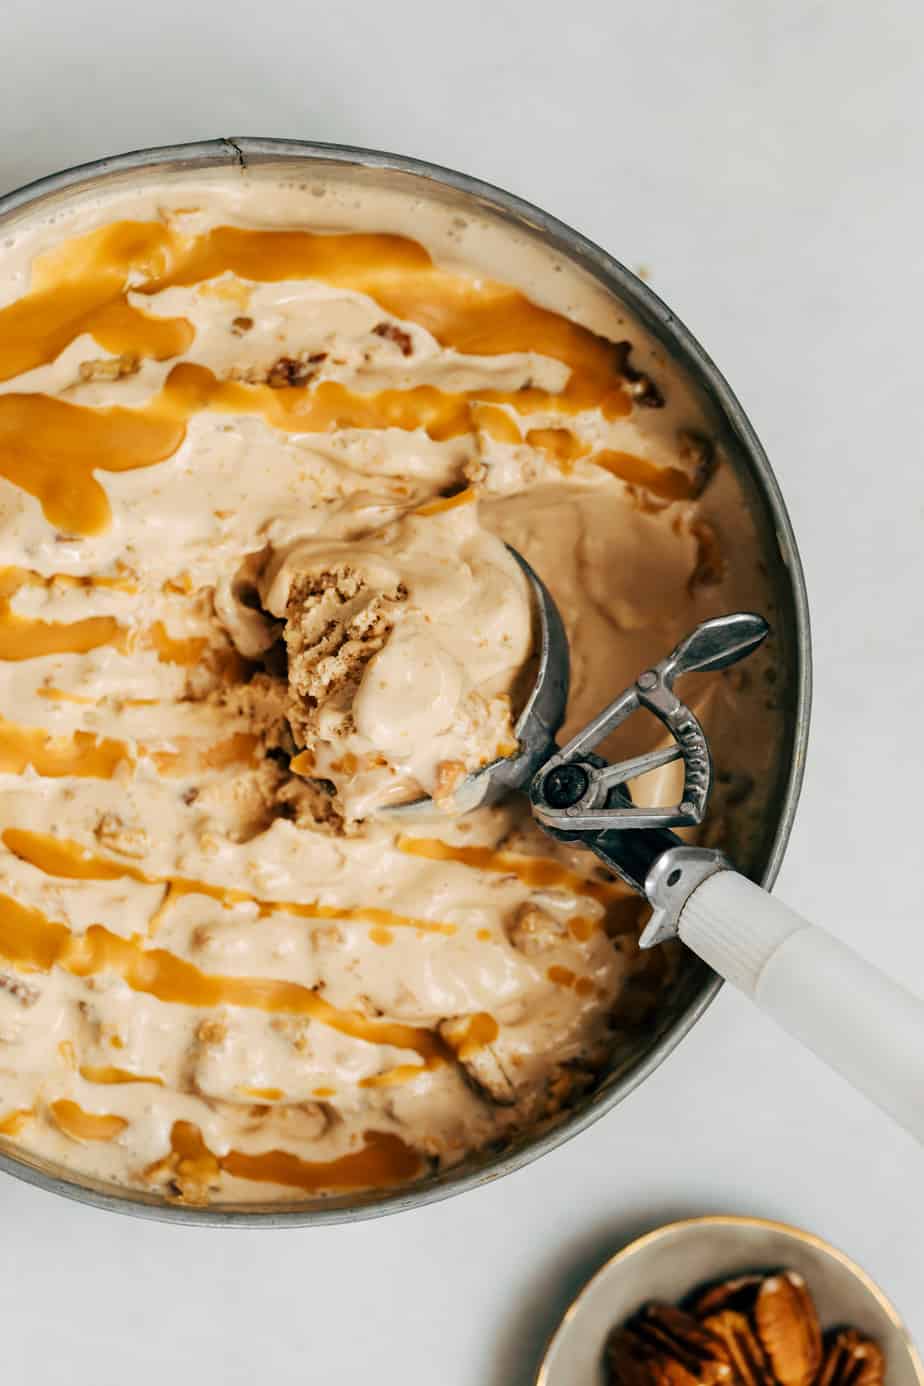 Caramel ice cream with a white ice cream scoop.